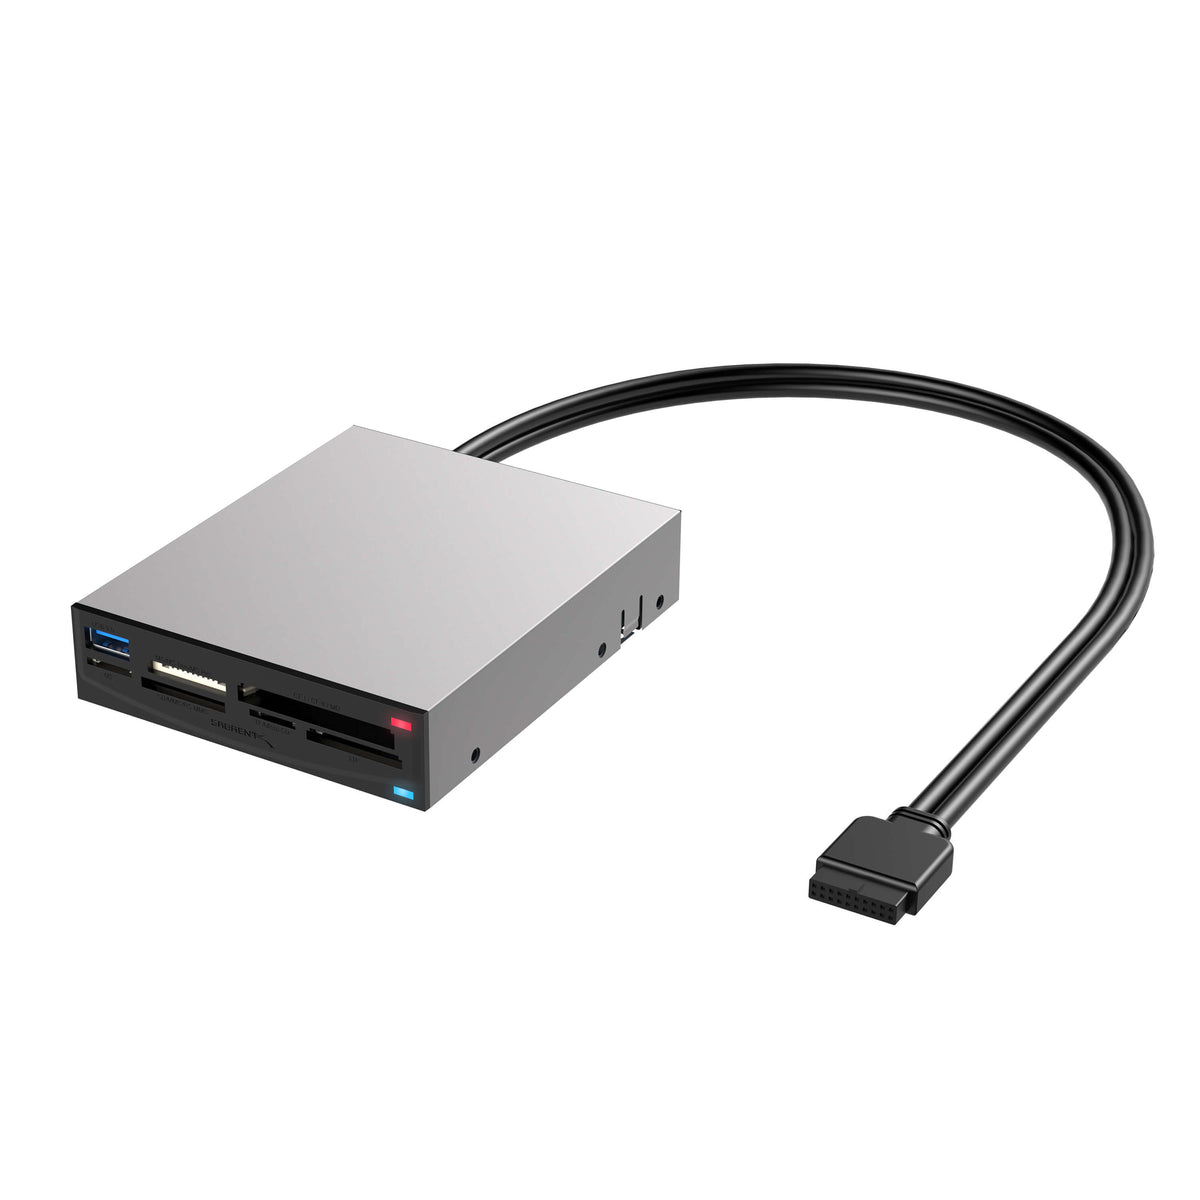 USB 3.0 Super Speed 74-In-1 3.5-Inch Internal Flash Media Card Reader/writer with USB 3.0 Port